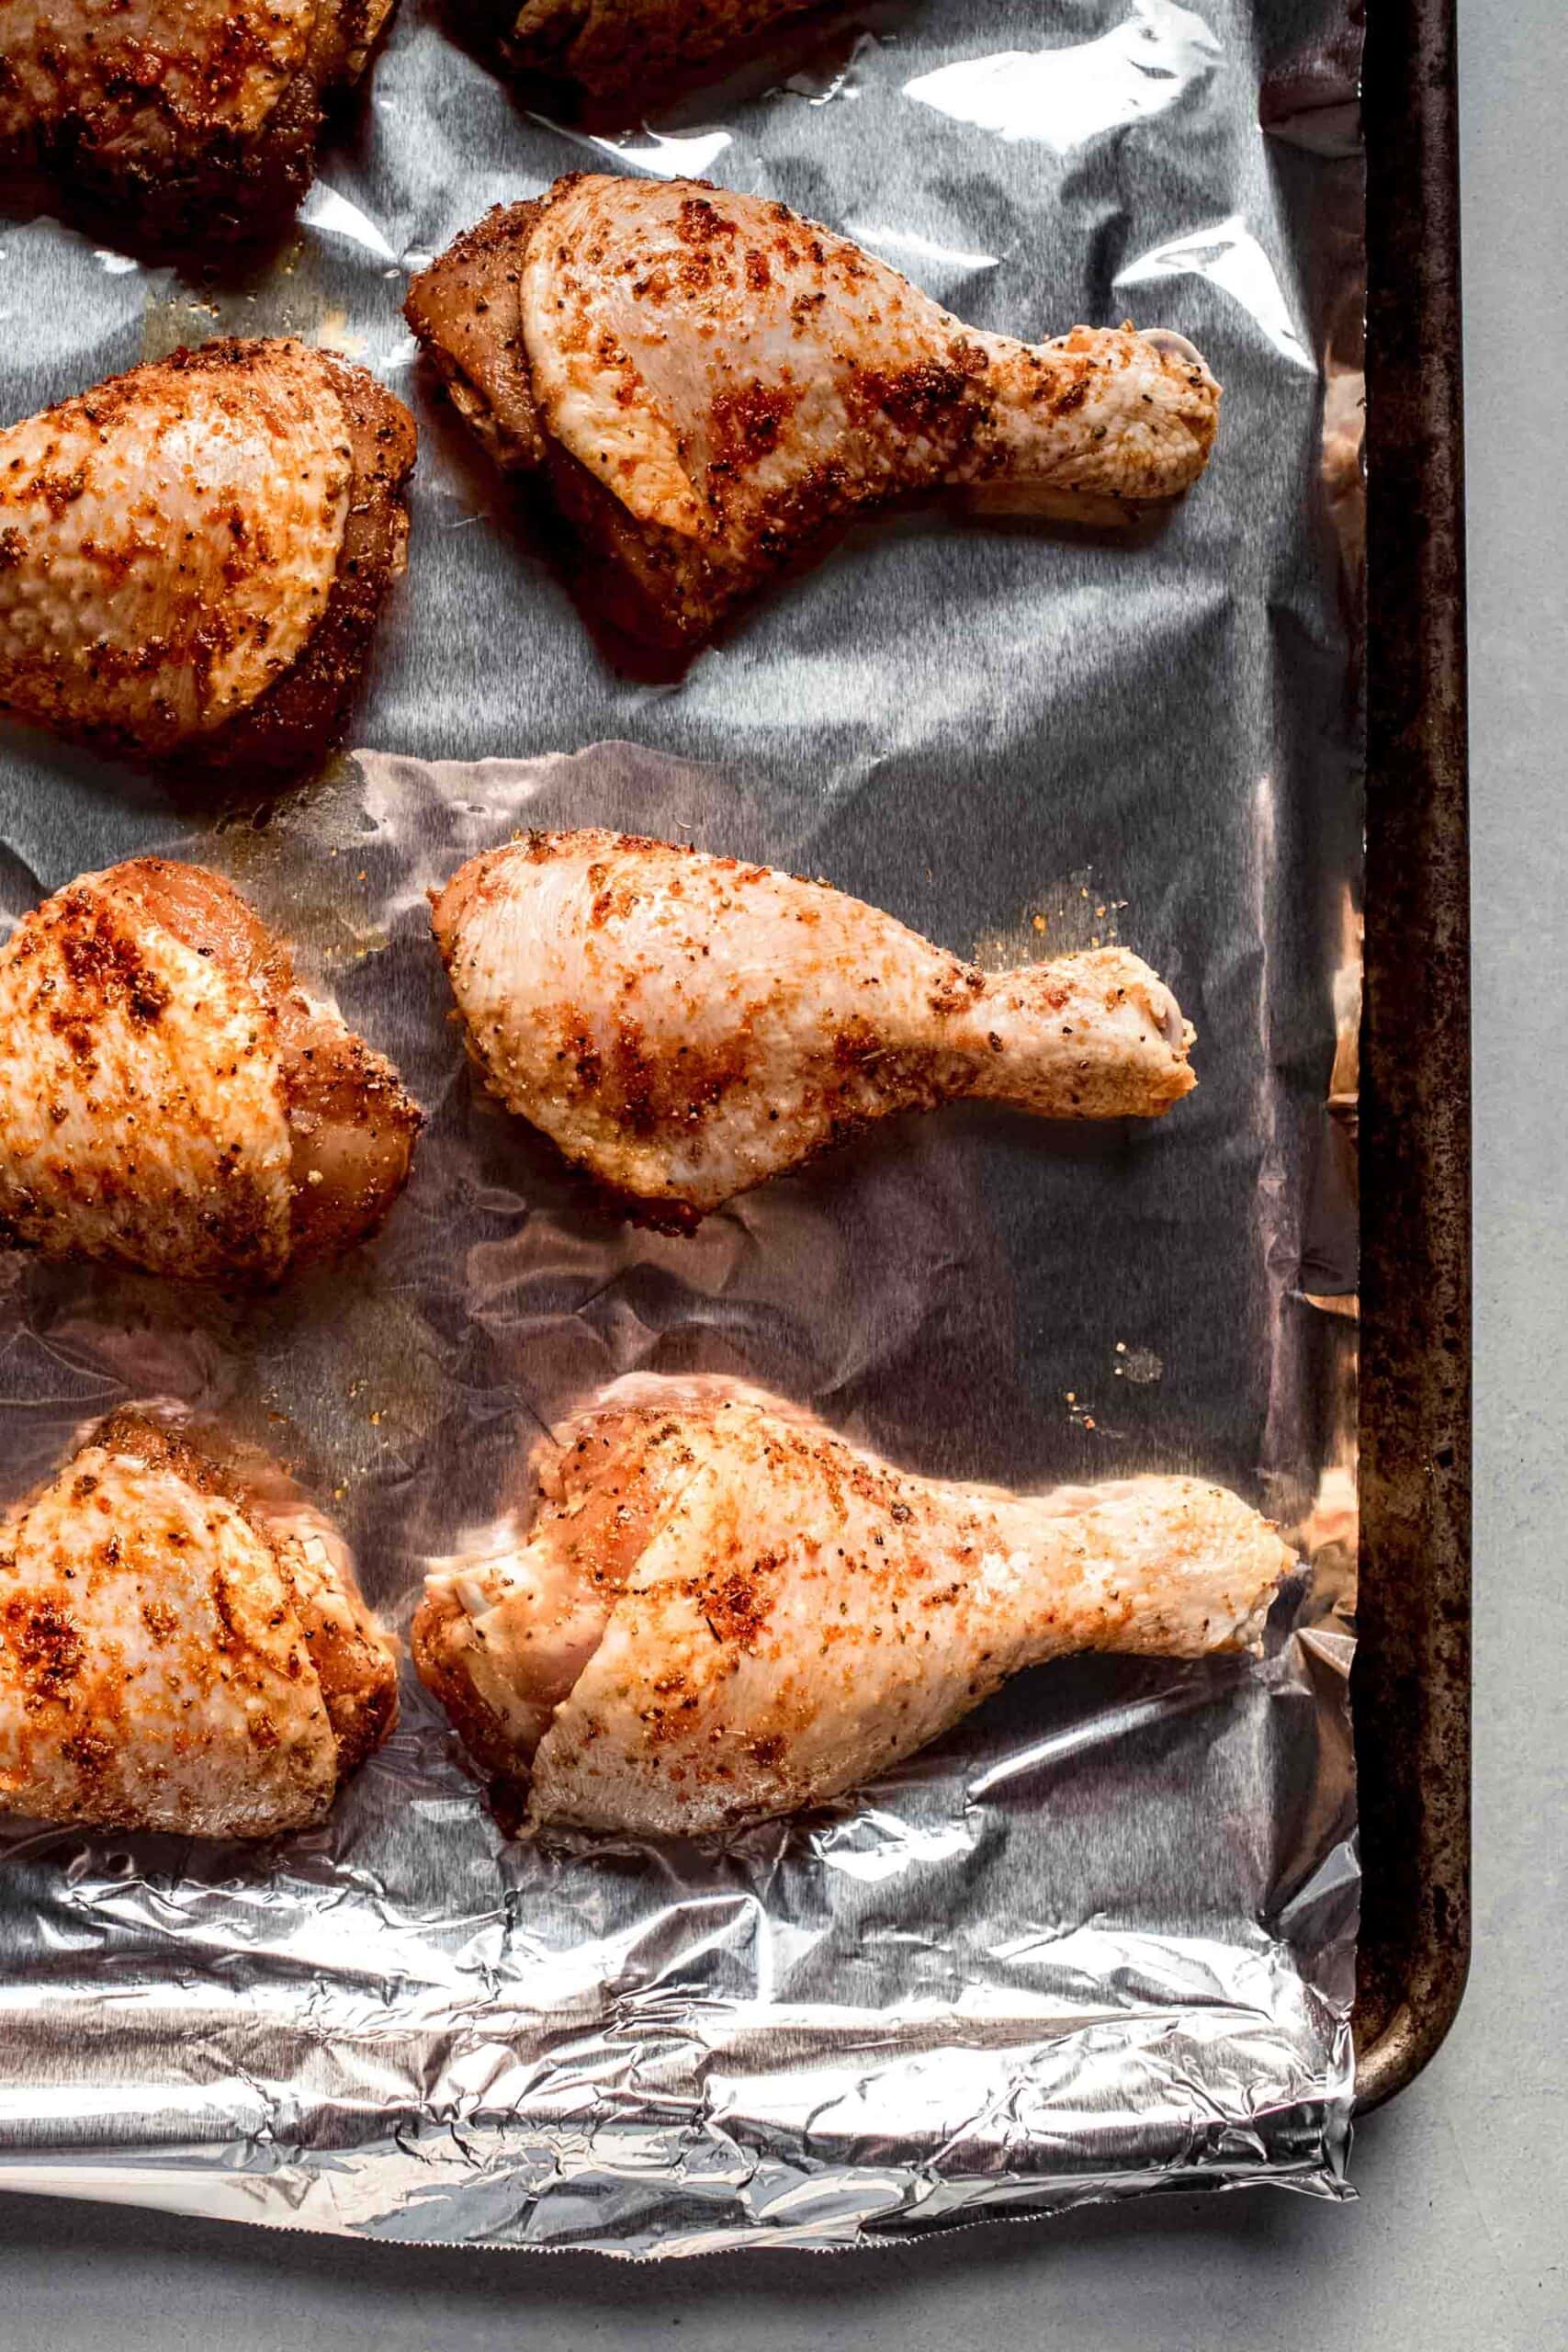 Uncooked chicken legs on baking sheet. 